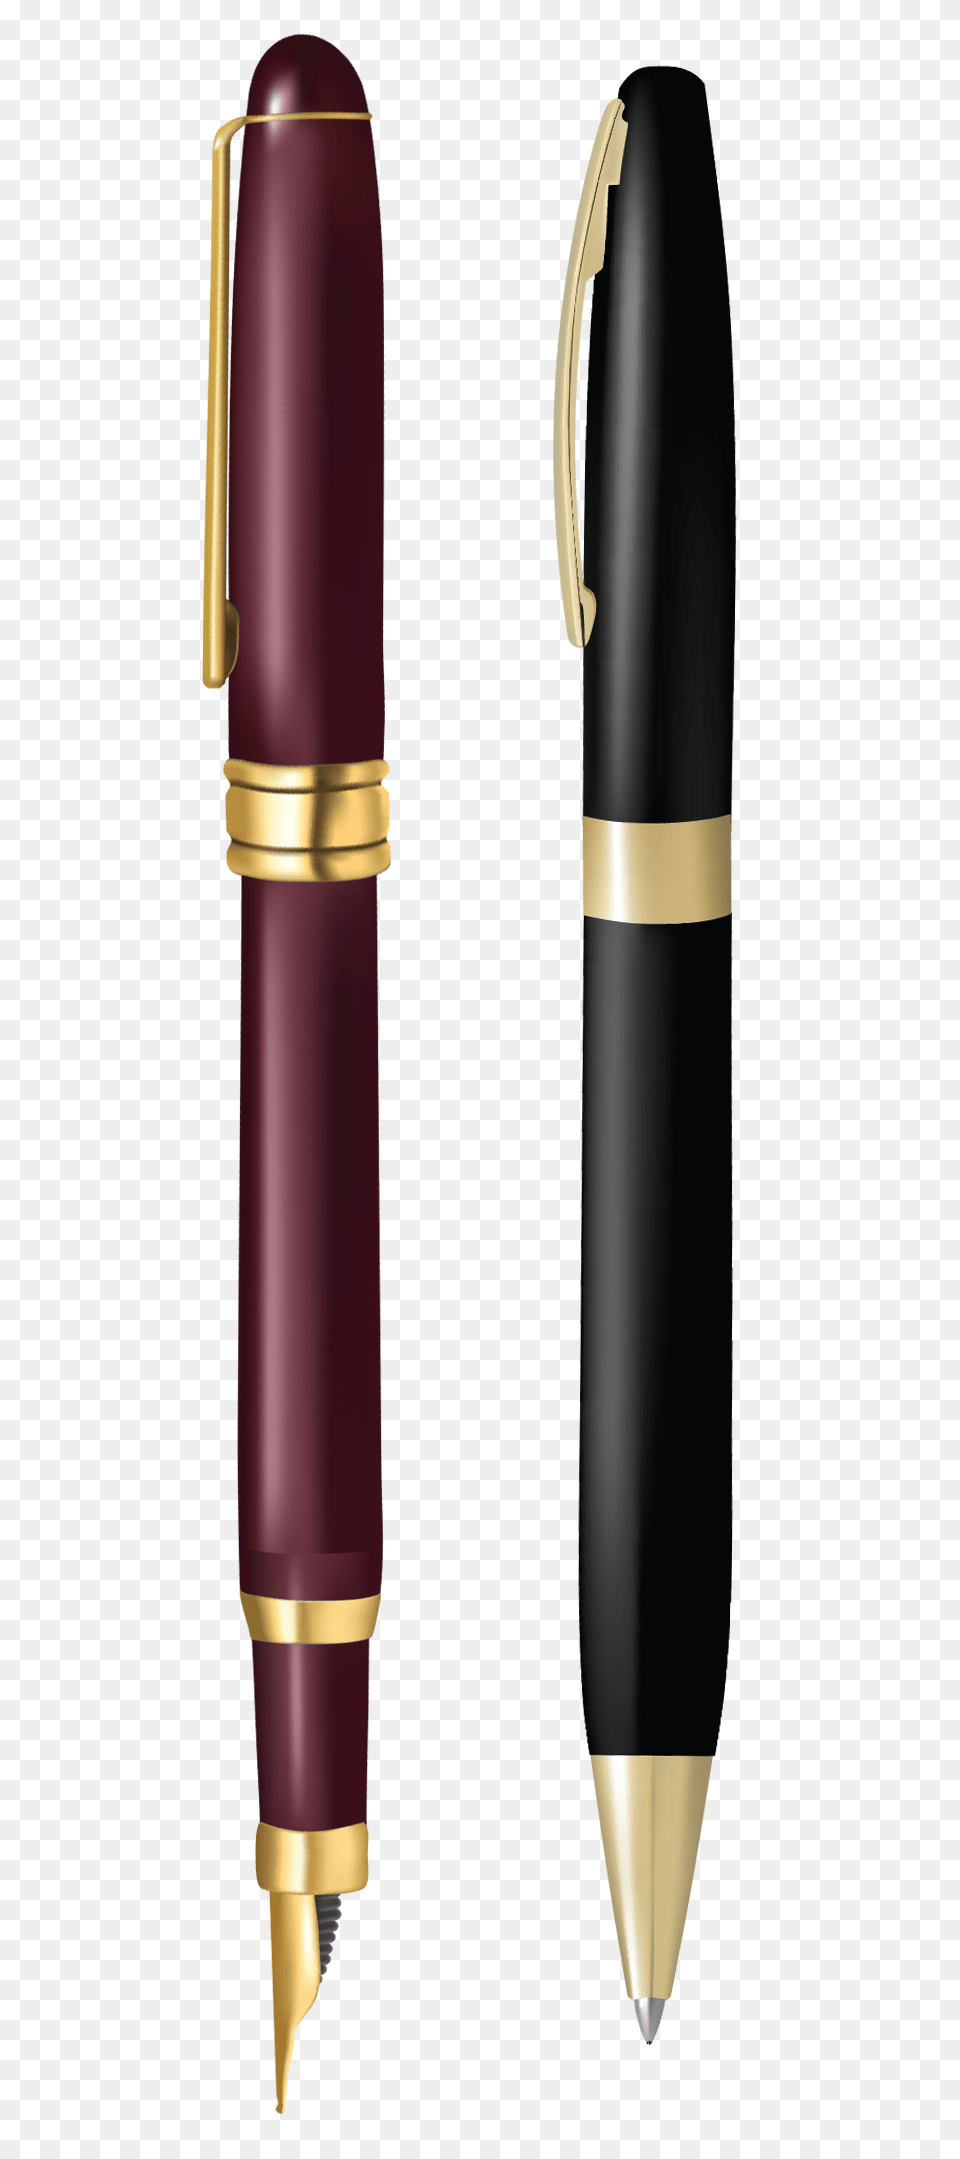 Pen And Ballpoint Pen, Fountain Pen, Cosmetics, Lipstick Png Image